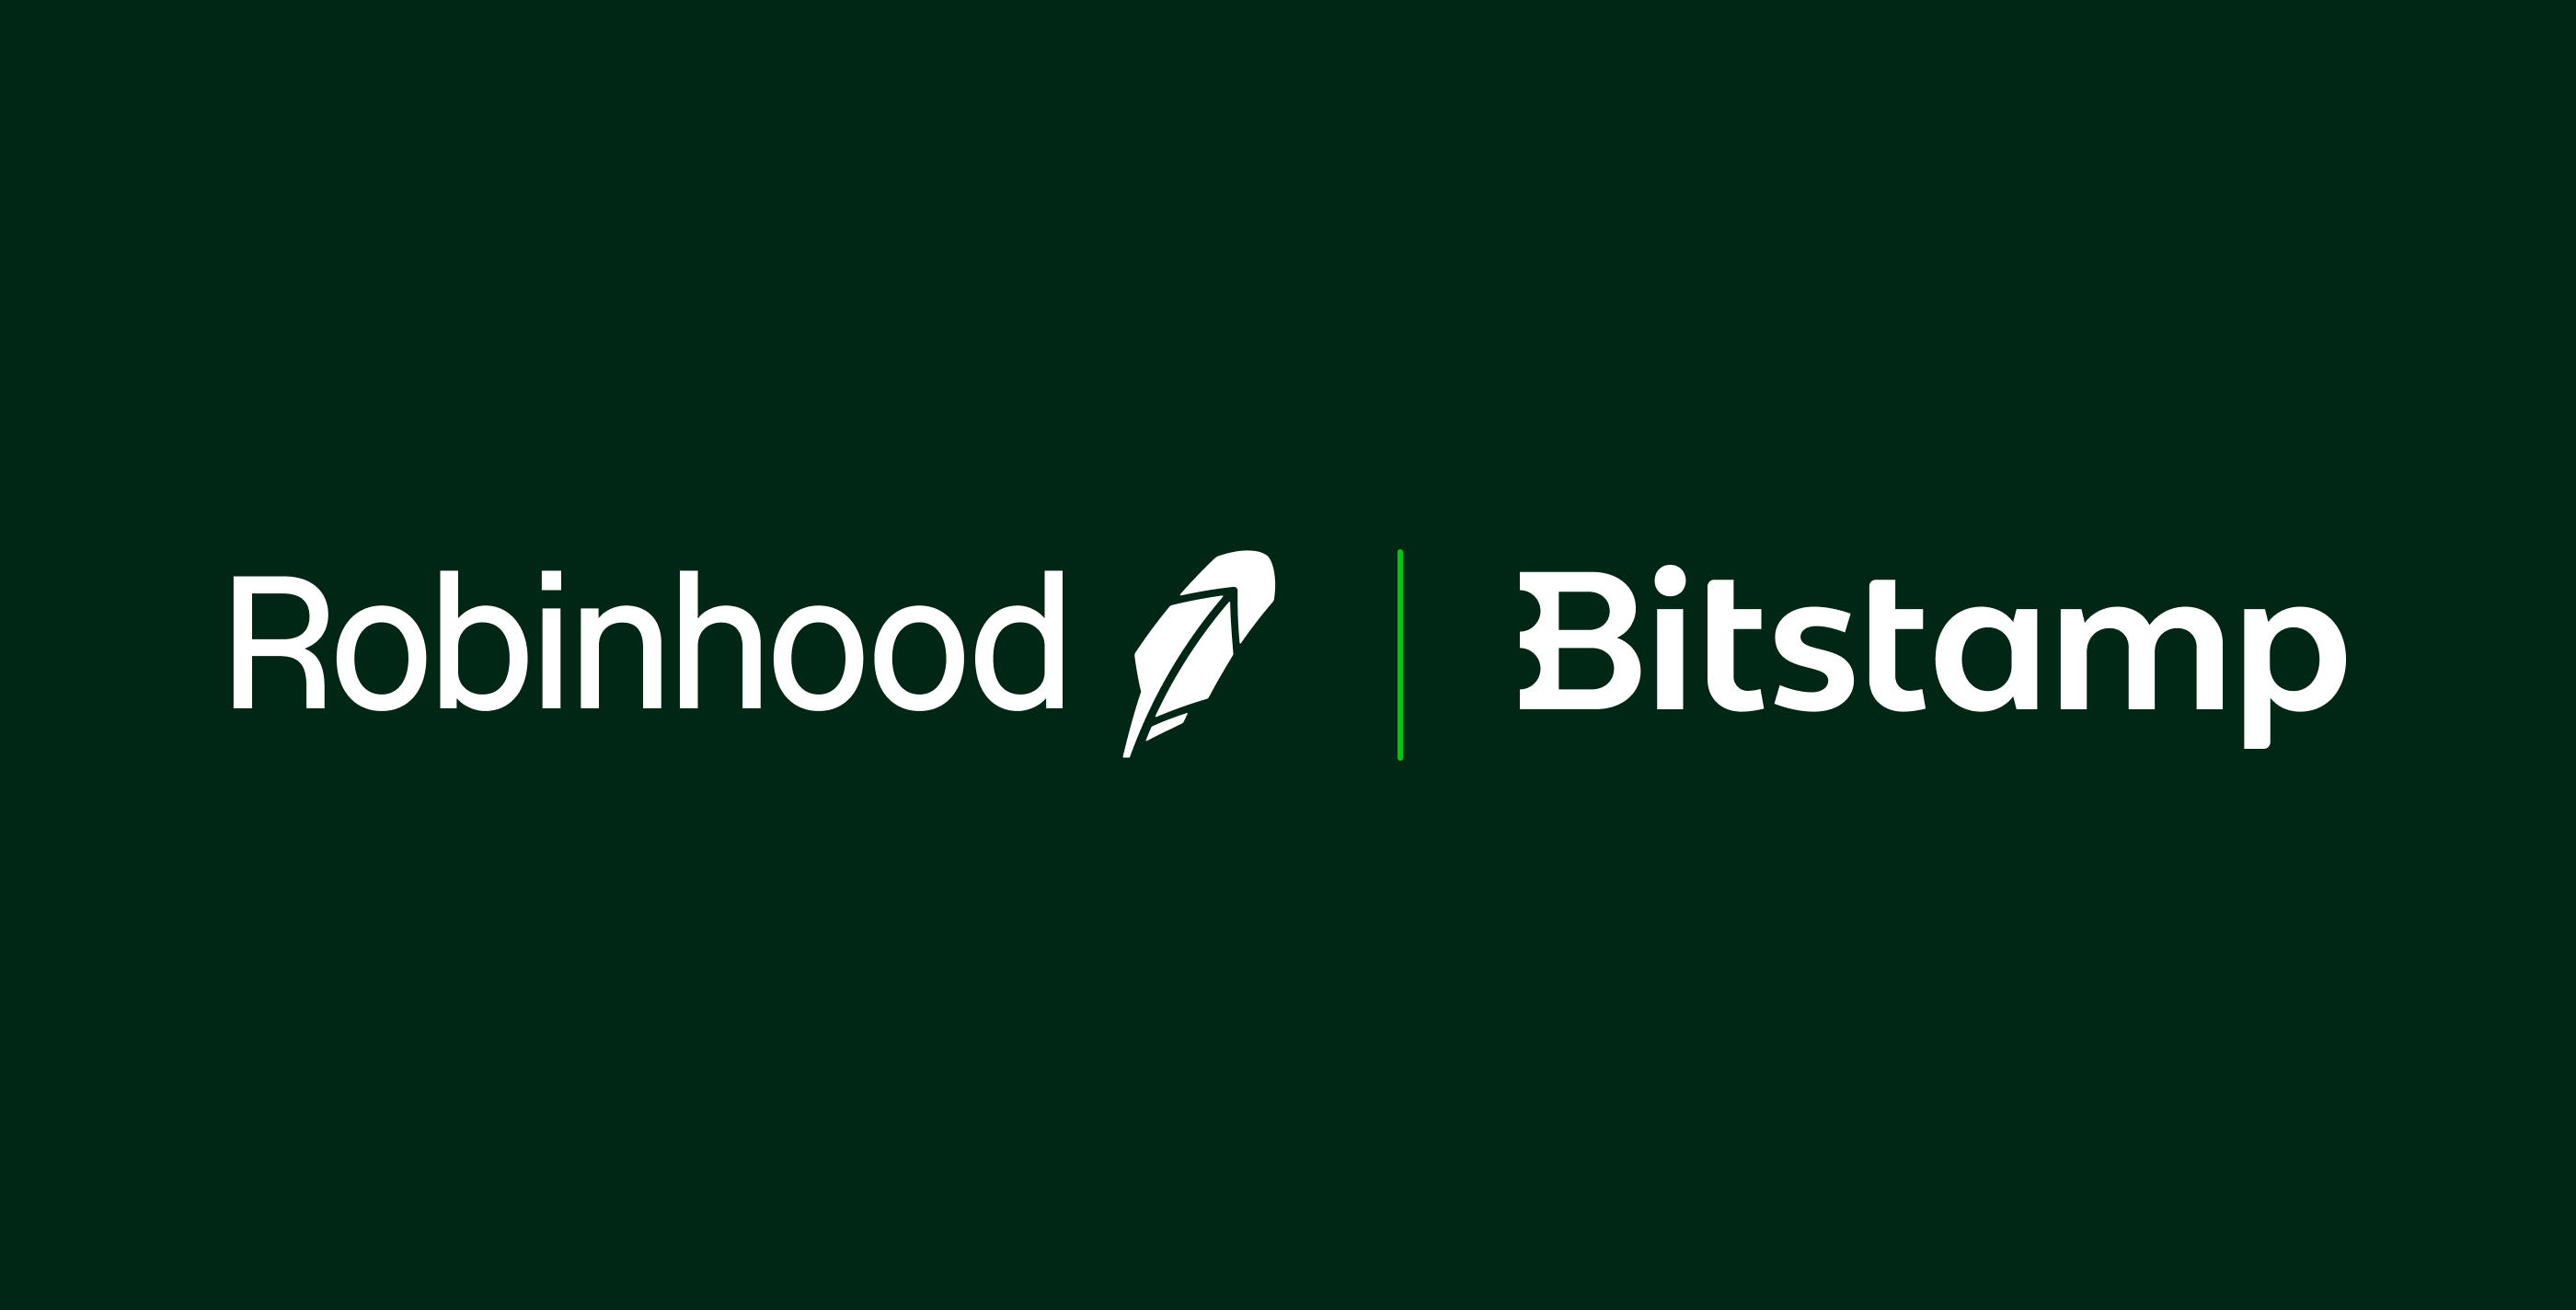 Robinhood to Acquire Bitstamp